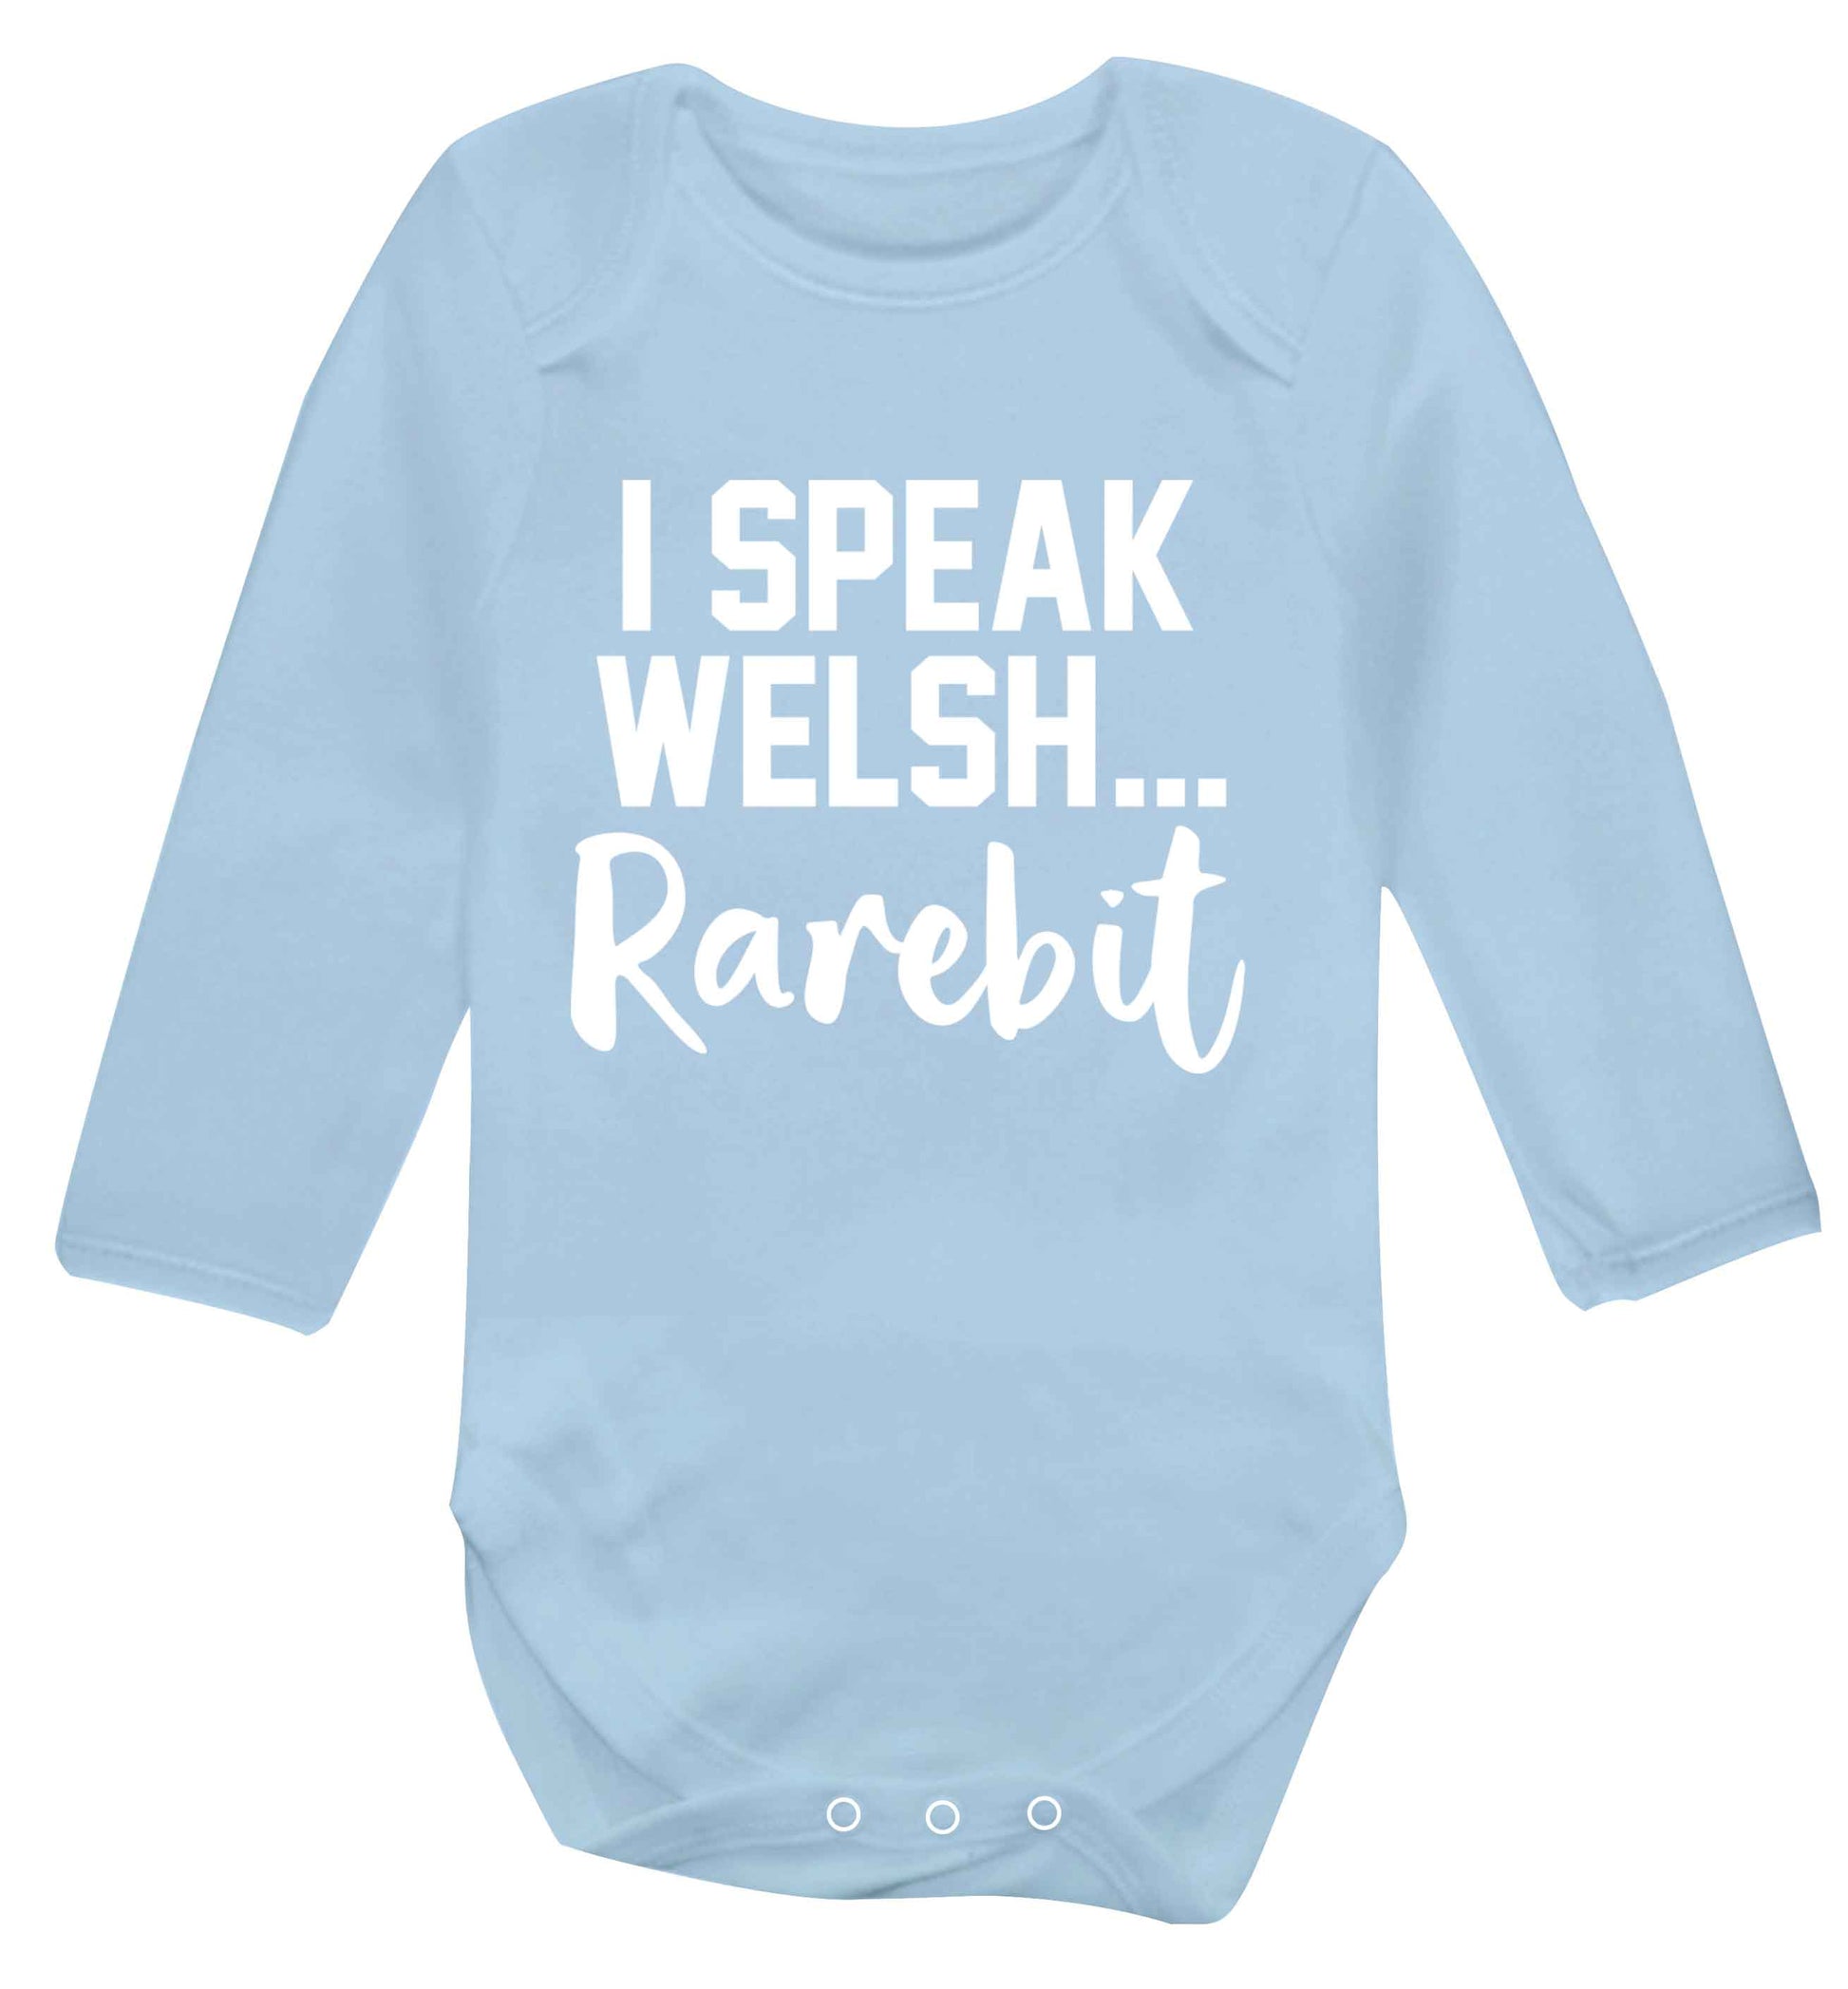 I speak Welsh...rarebit Baby Vest long sleeved pale blue 6-12 months